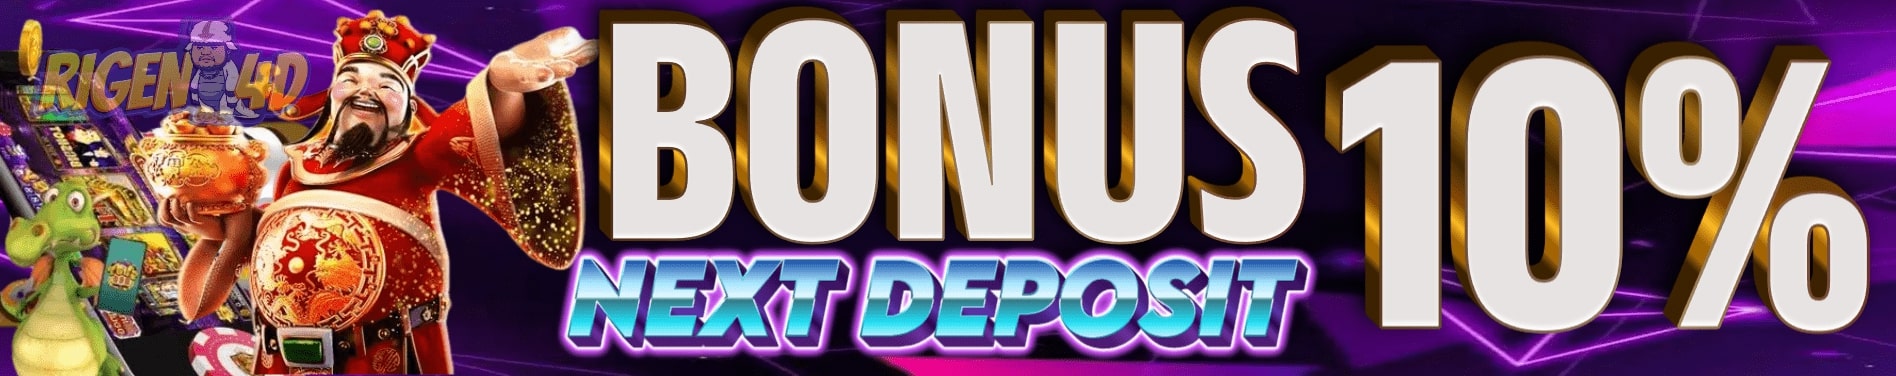 Bonus Next Deposit 10%